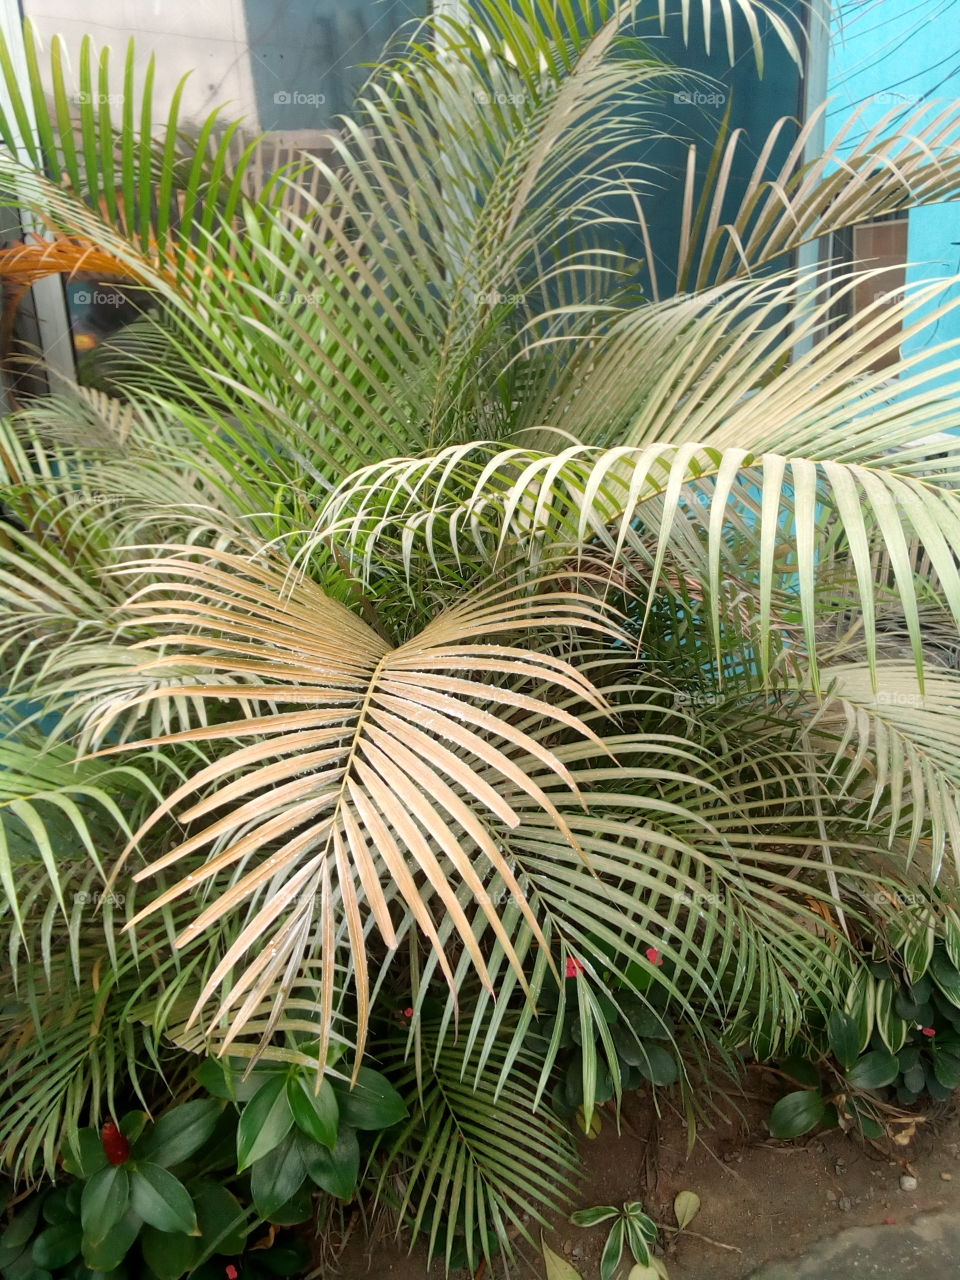 Palm flower